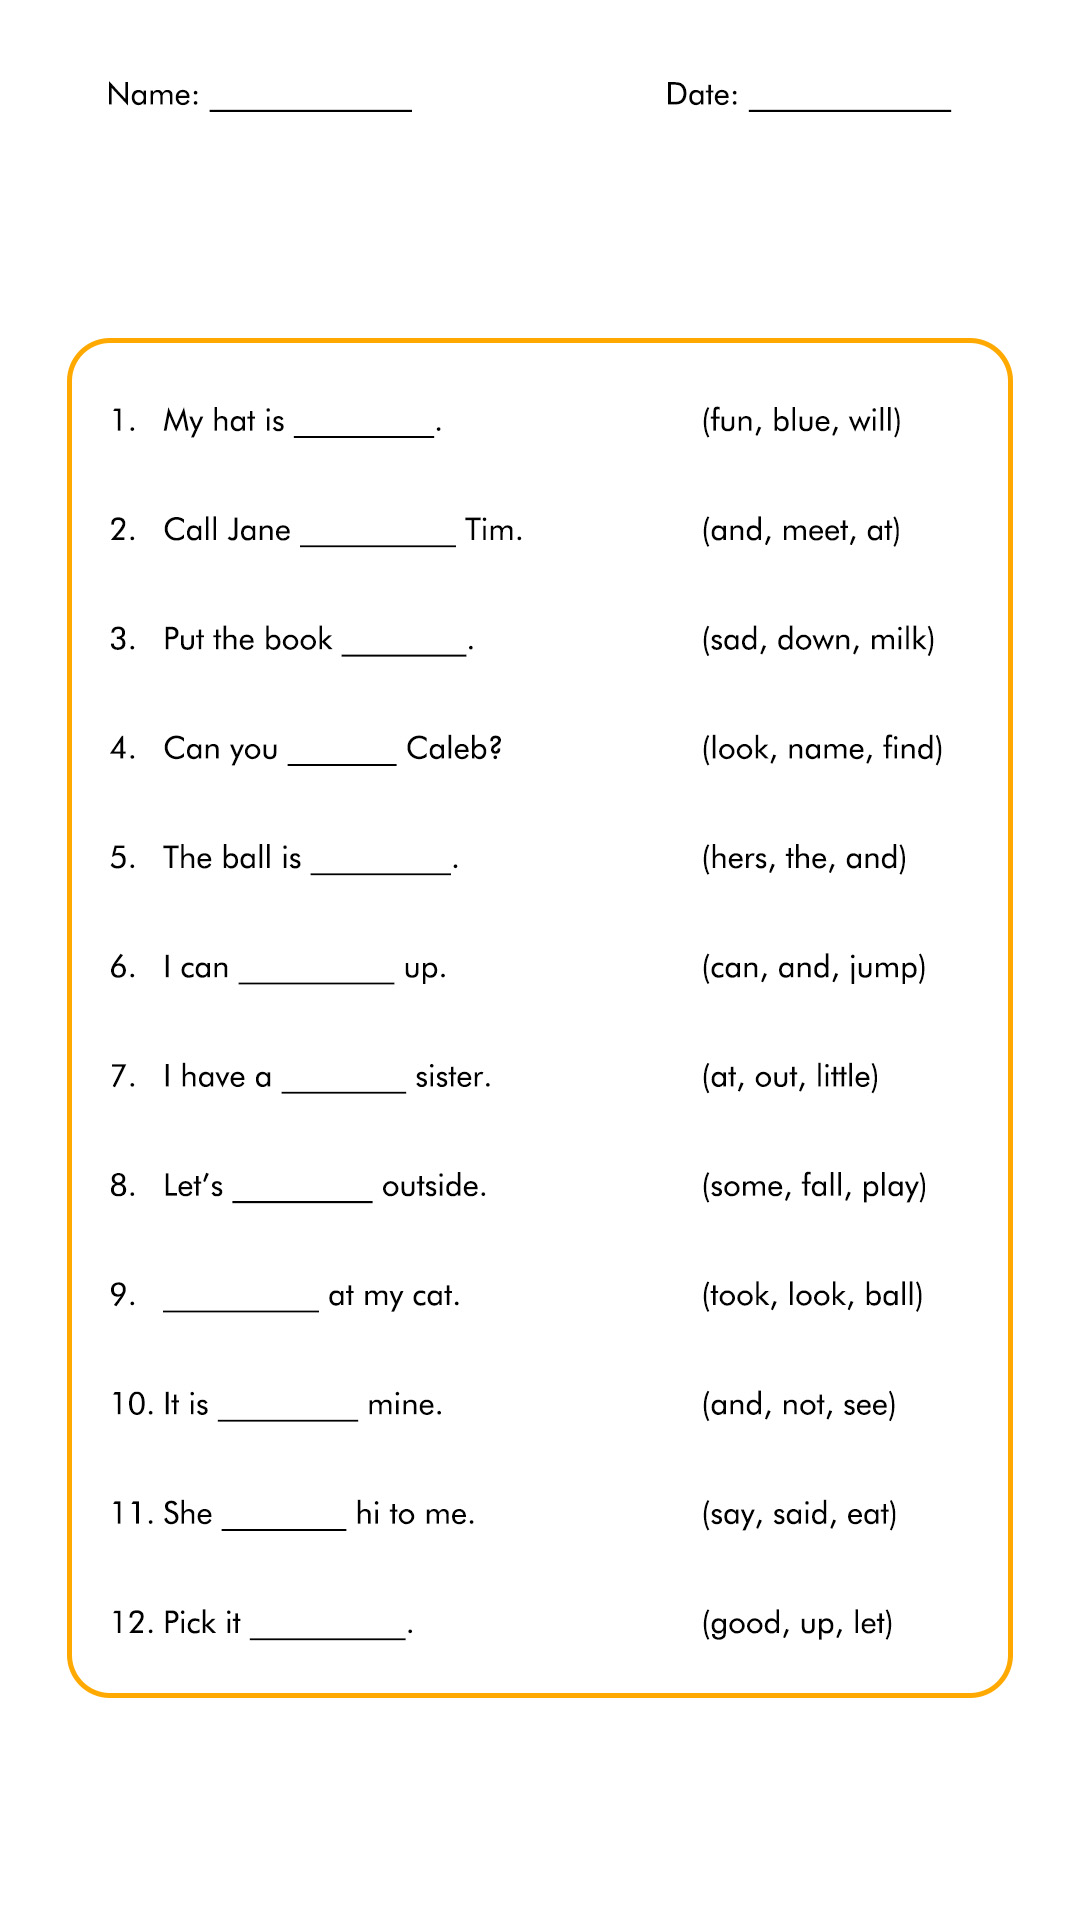 Free Printable Reading Comprehension Worksheets Image